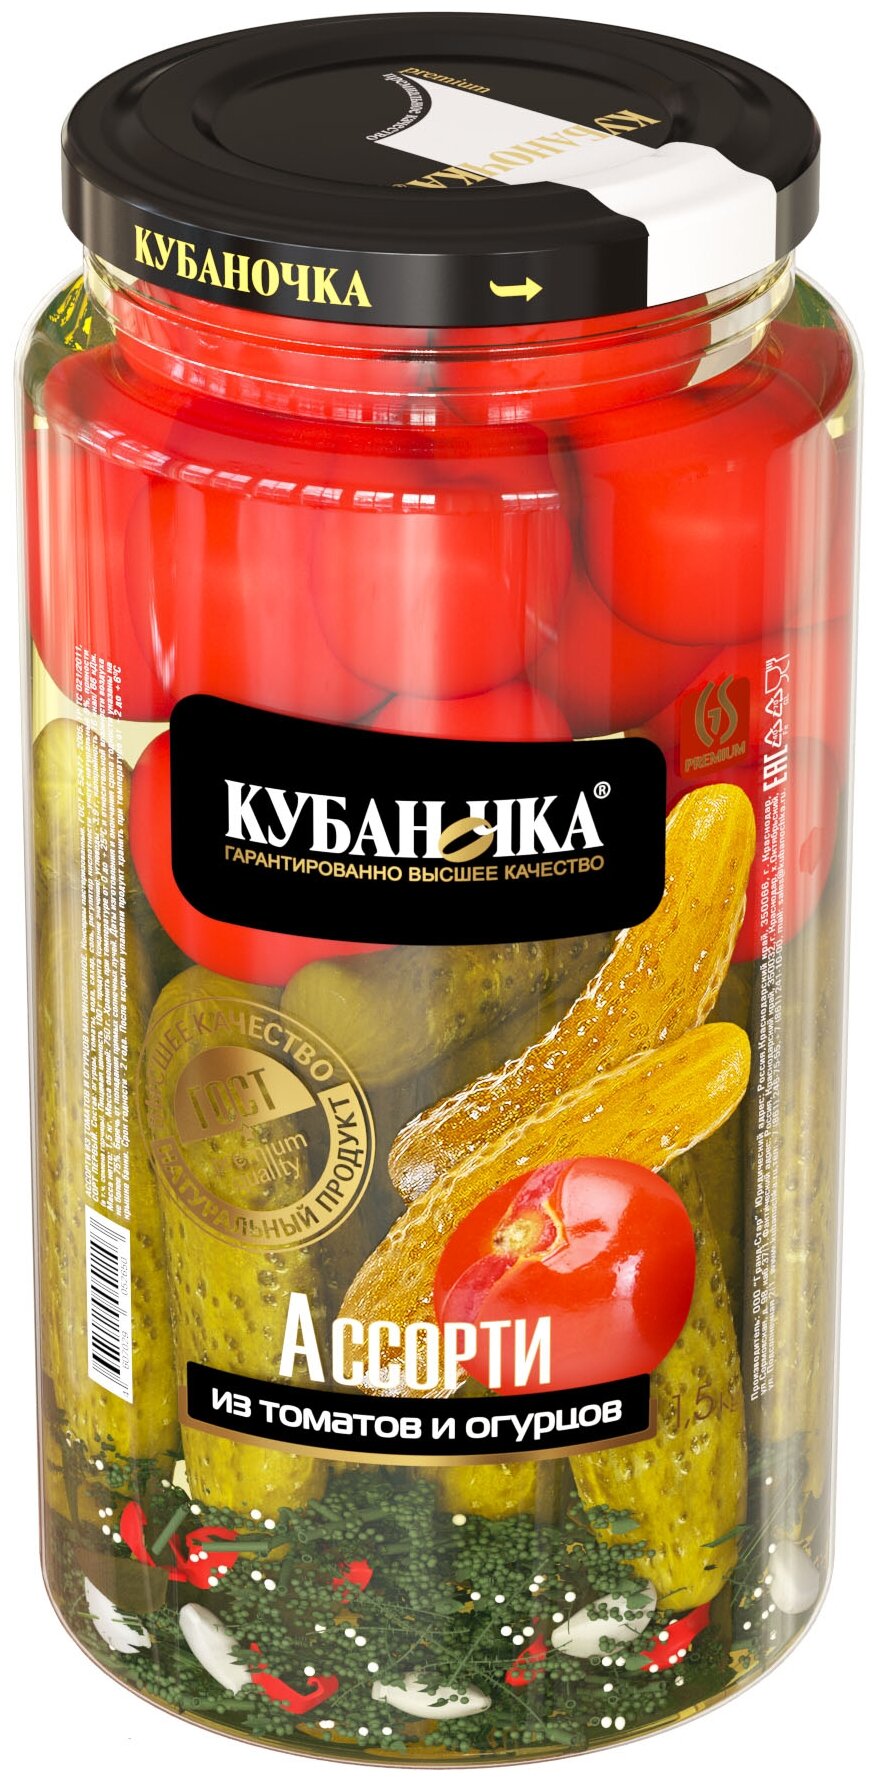 Ассорти из томатов и огурцов 1500-1600мл кубаночка